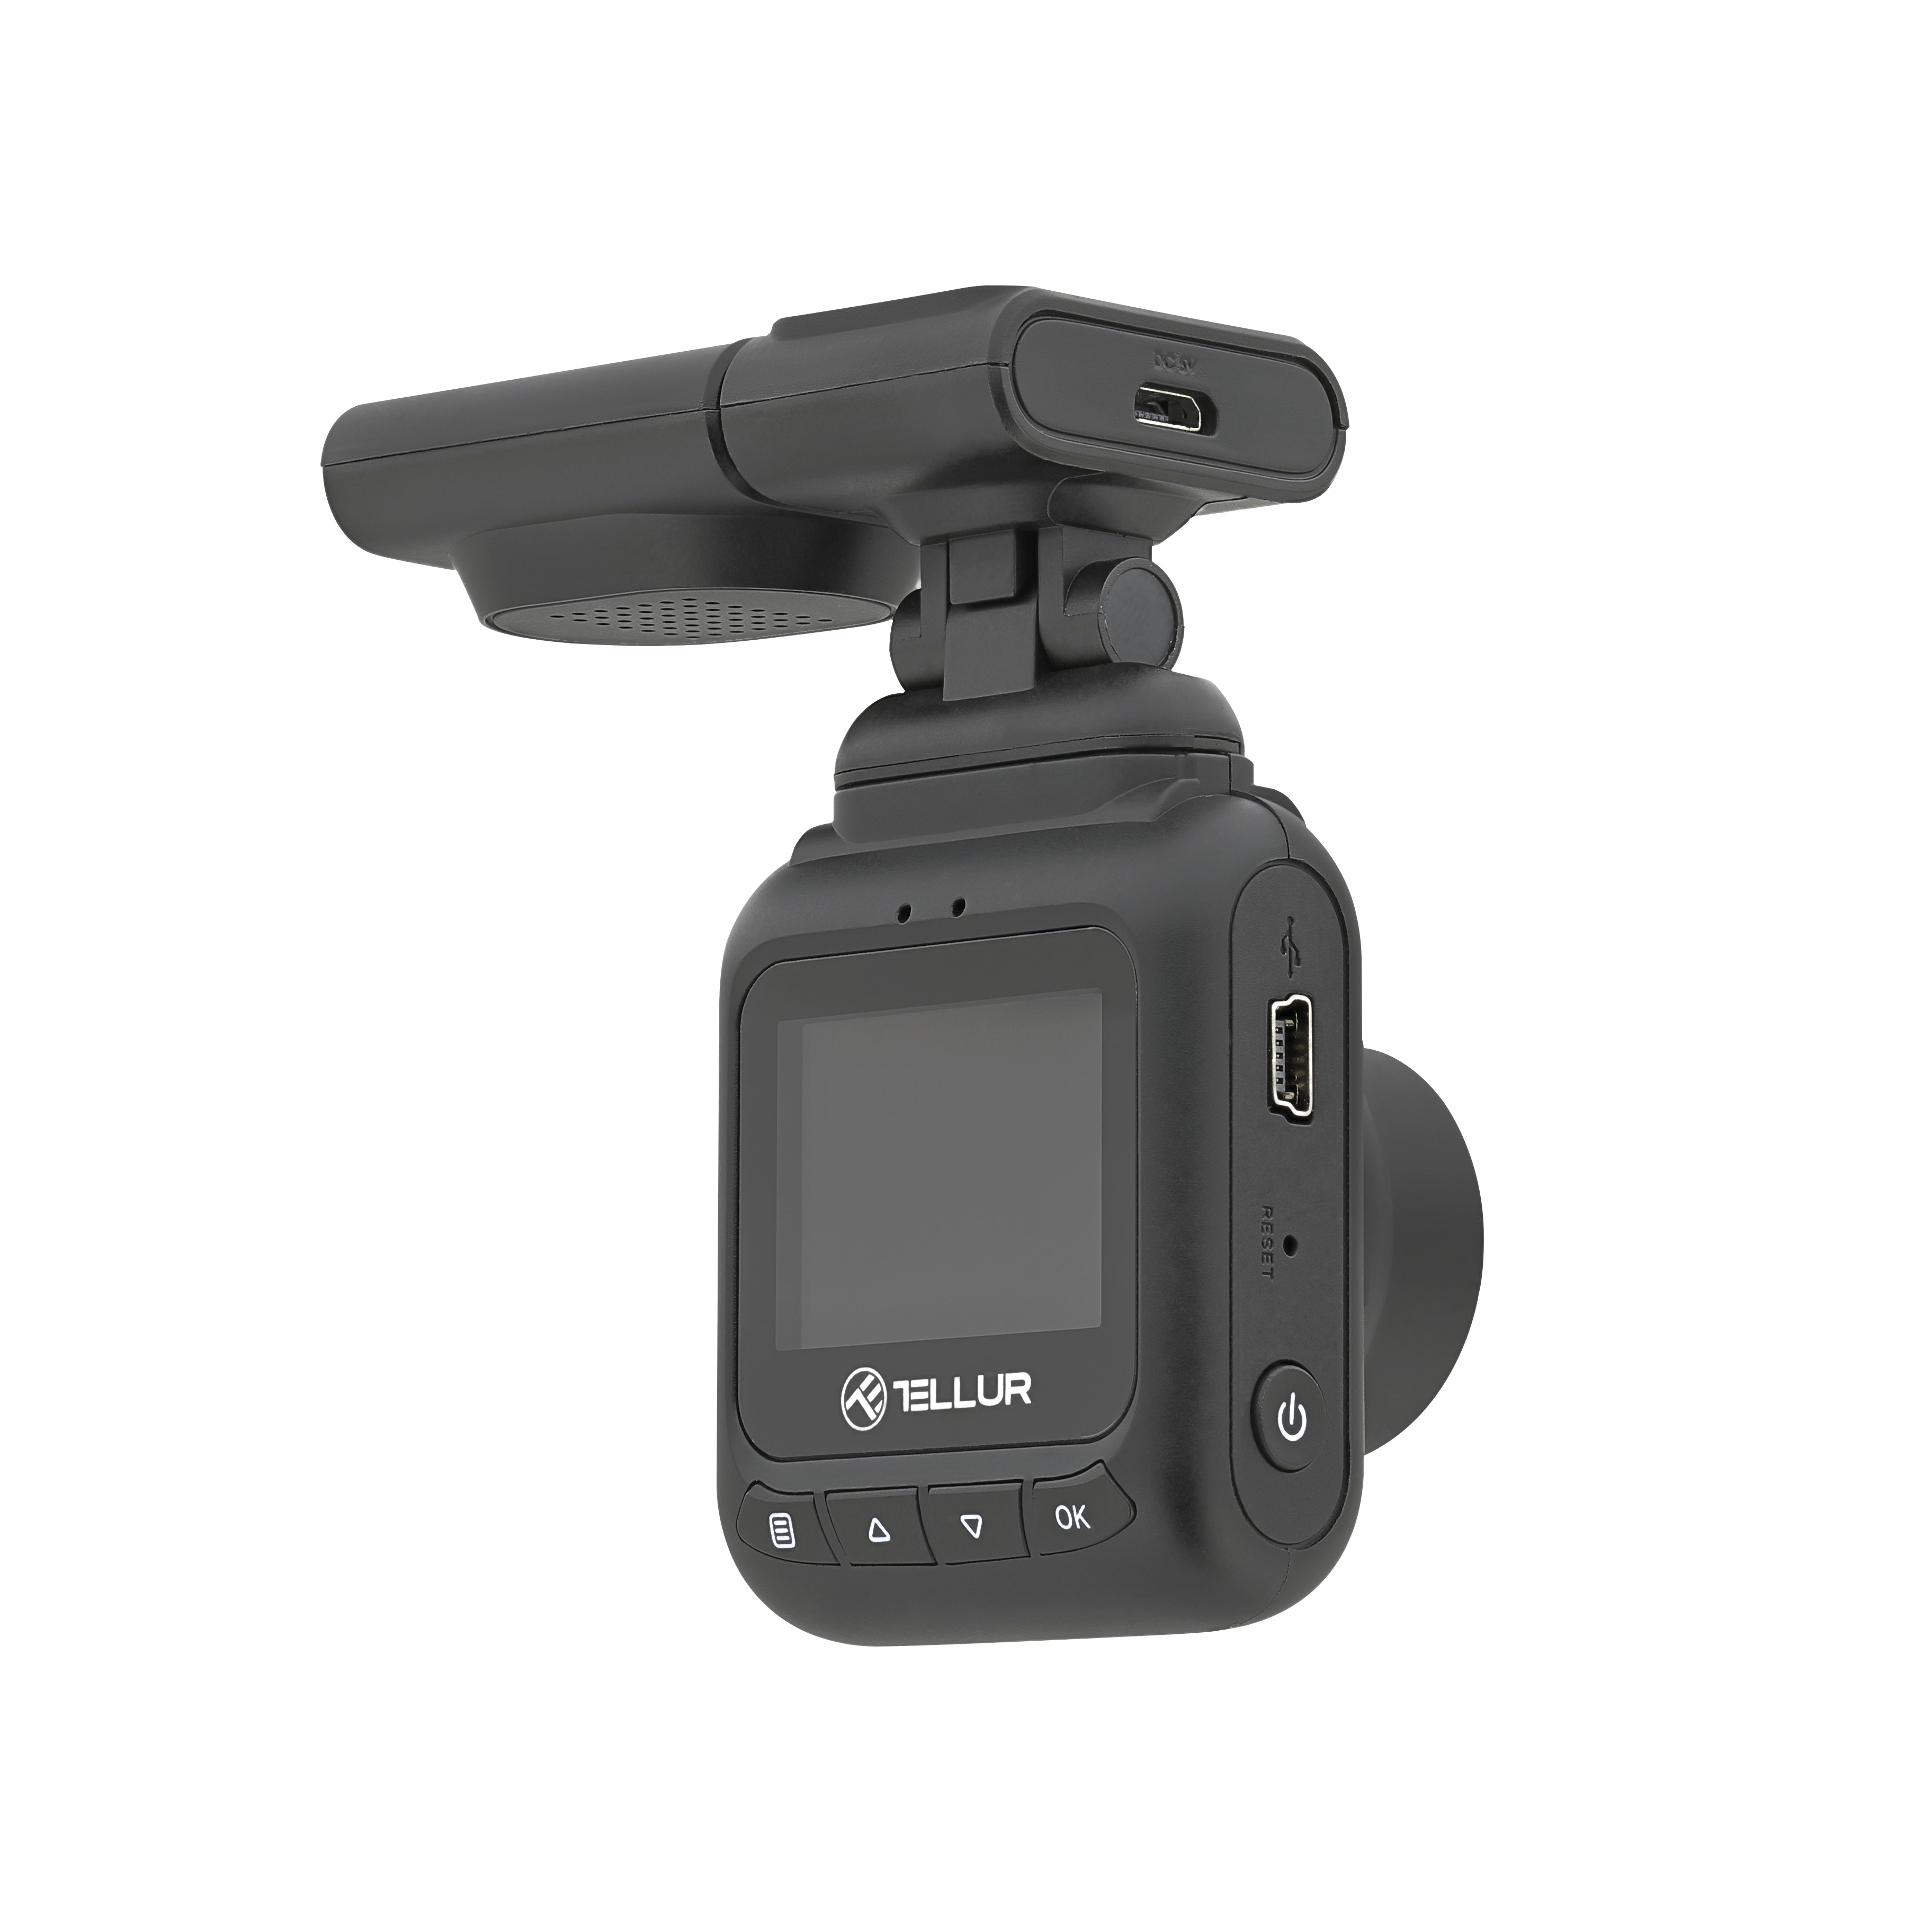 TELLUR Dash-Patrouille DC2, FullHD, Display Dashcam GPS 1080P